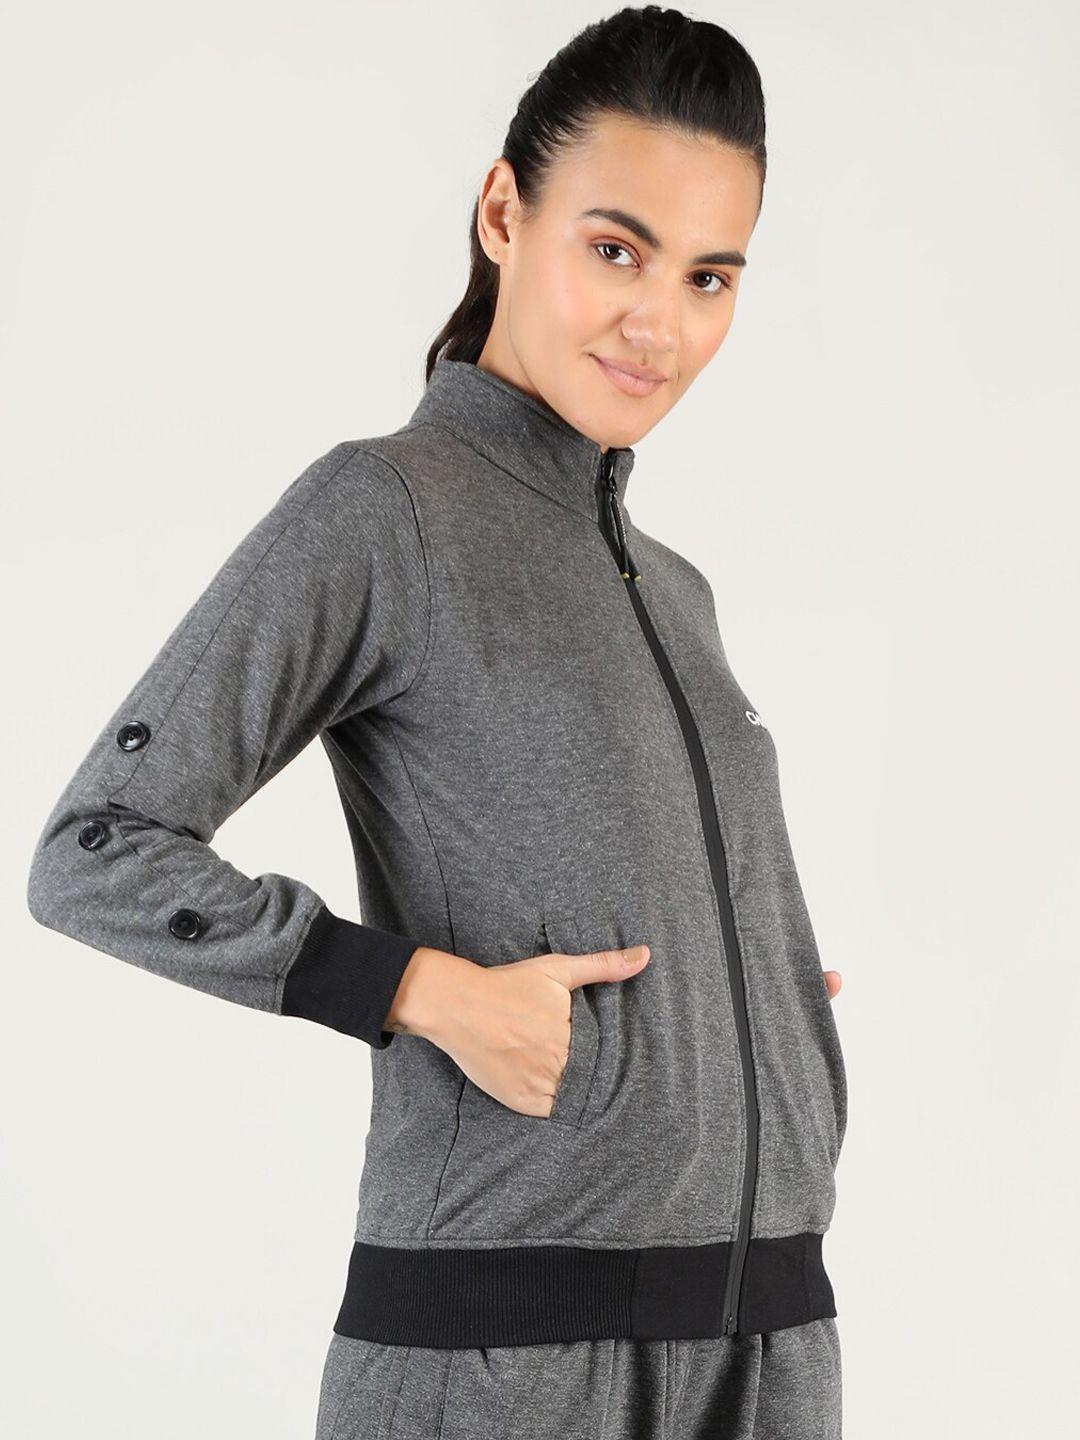 chkokko women grey training or gym sporty jacket